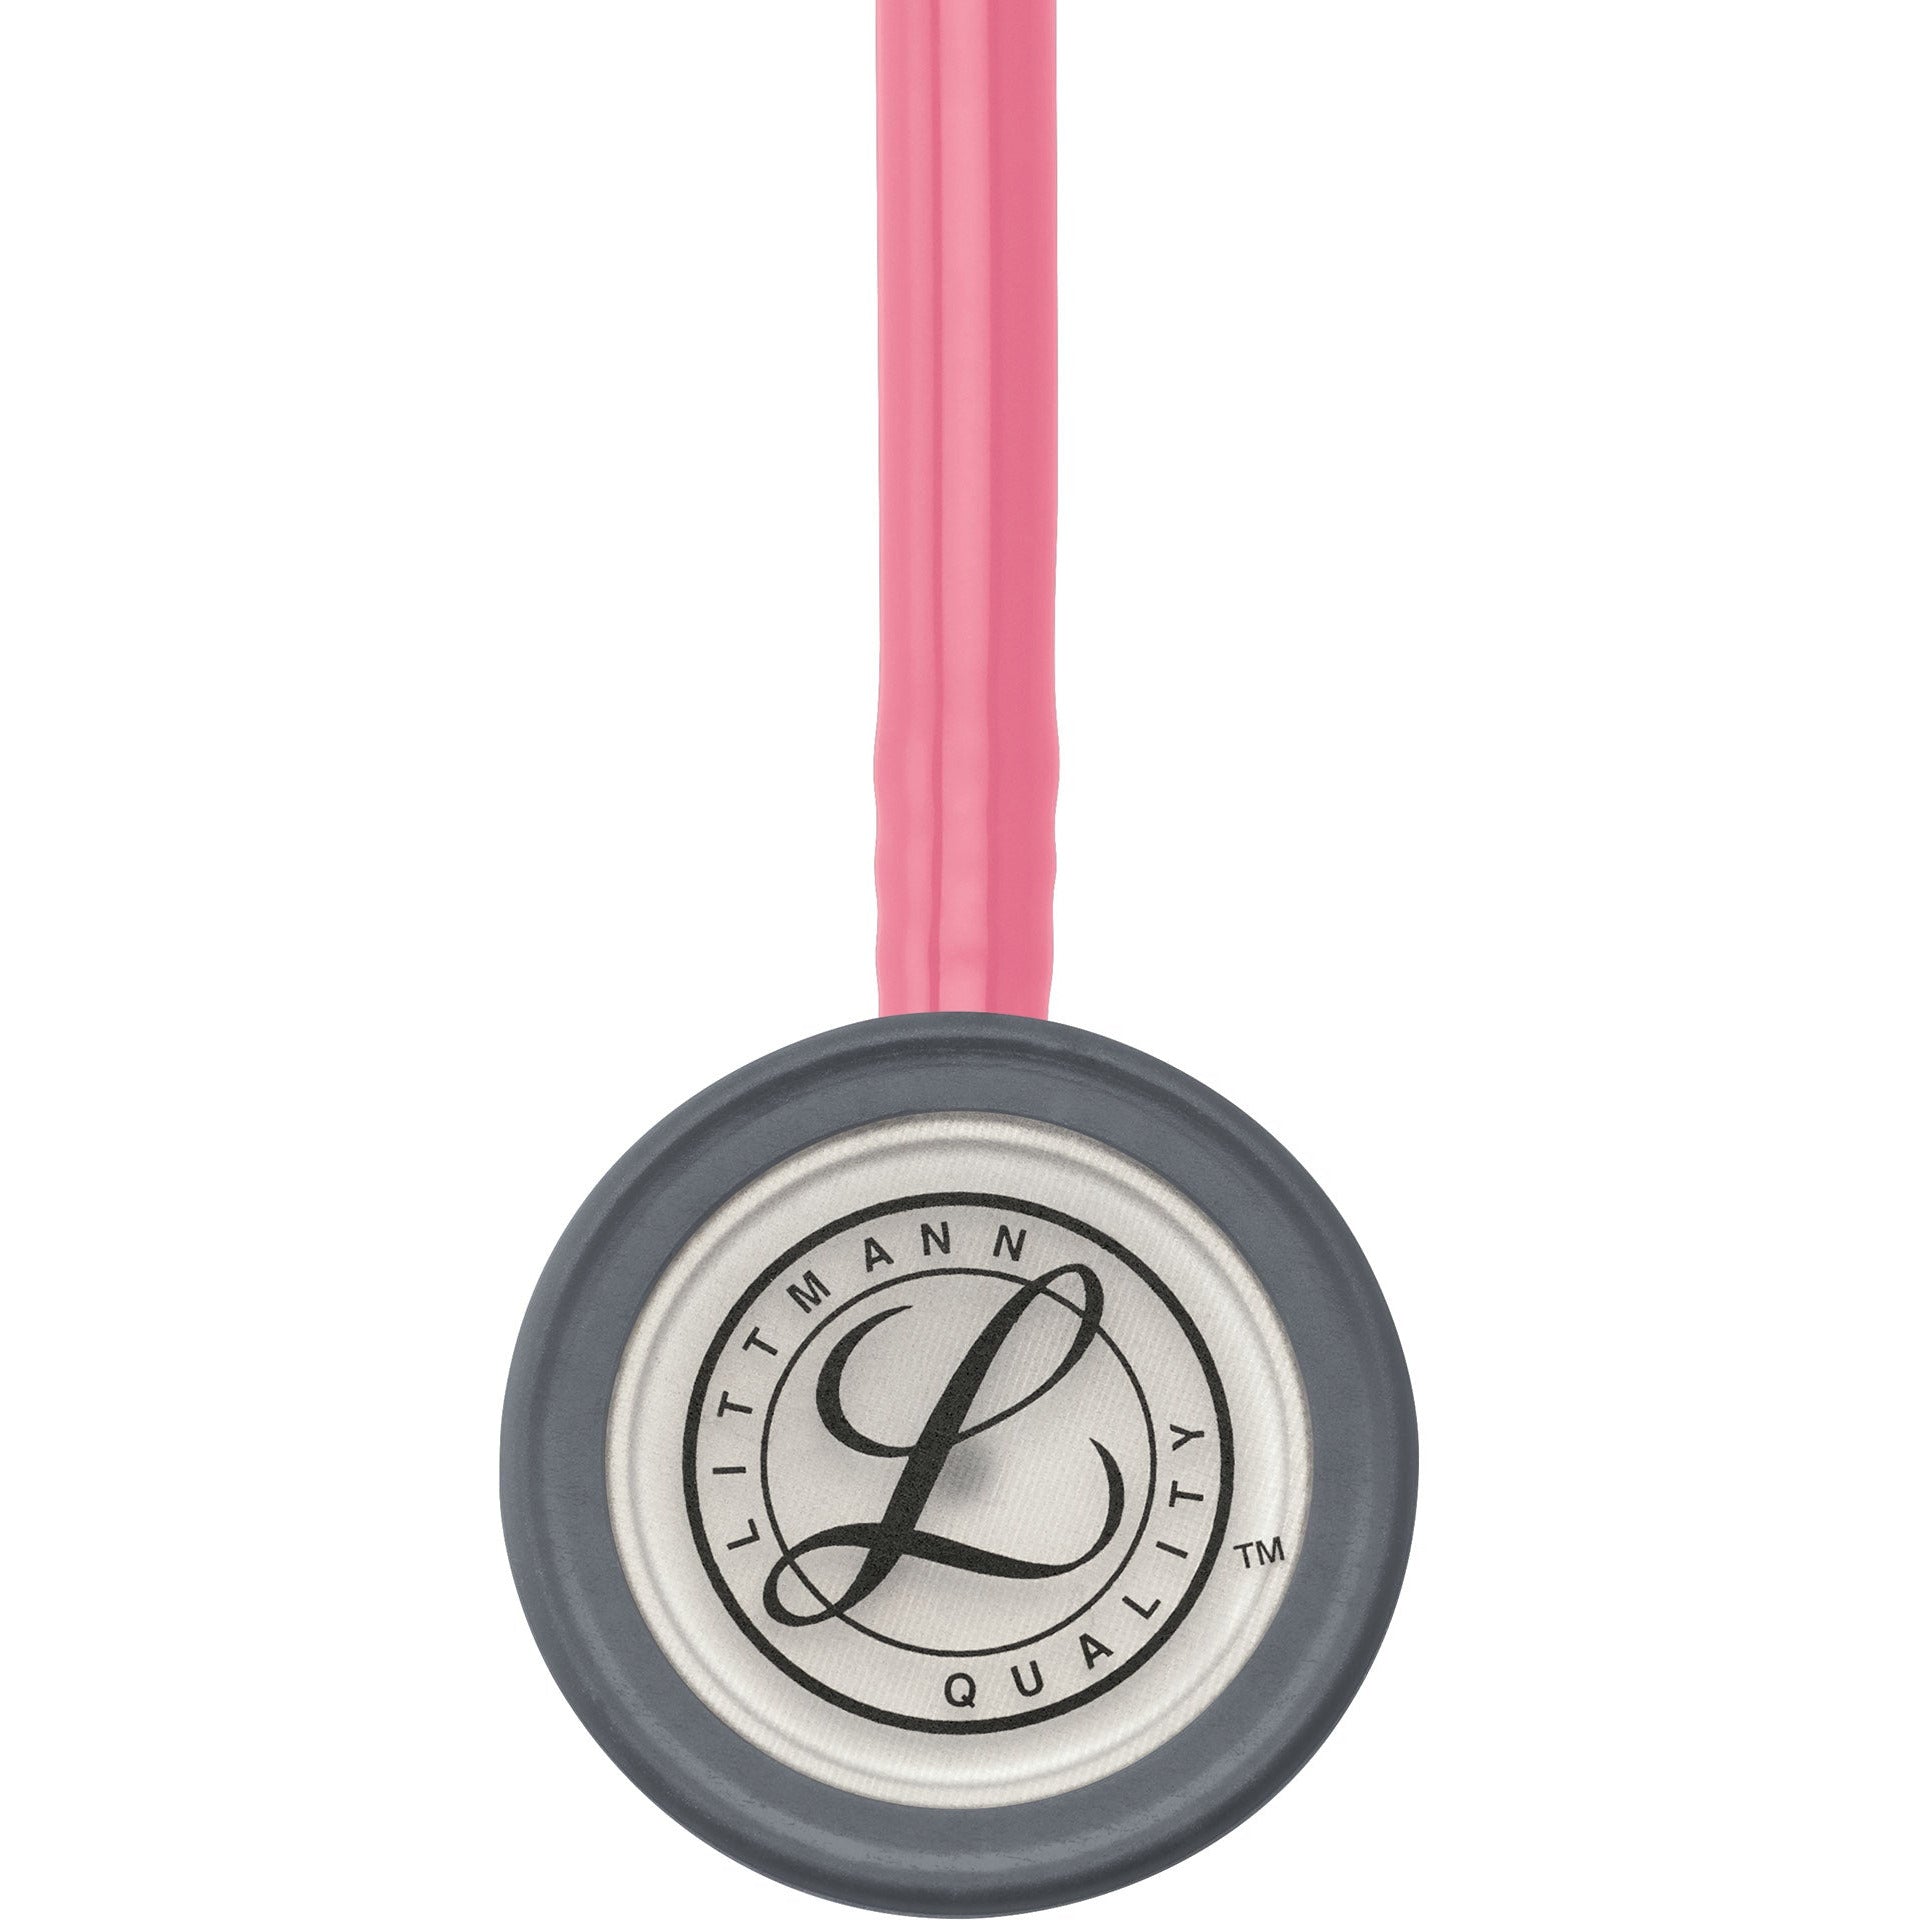 Littmann Classic III Stethoscope: Pearl Pink 5633 - Student Program 3M Littmann